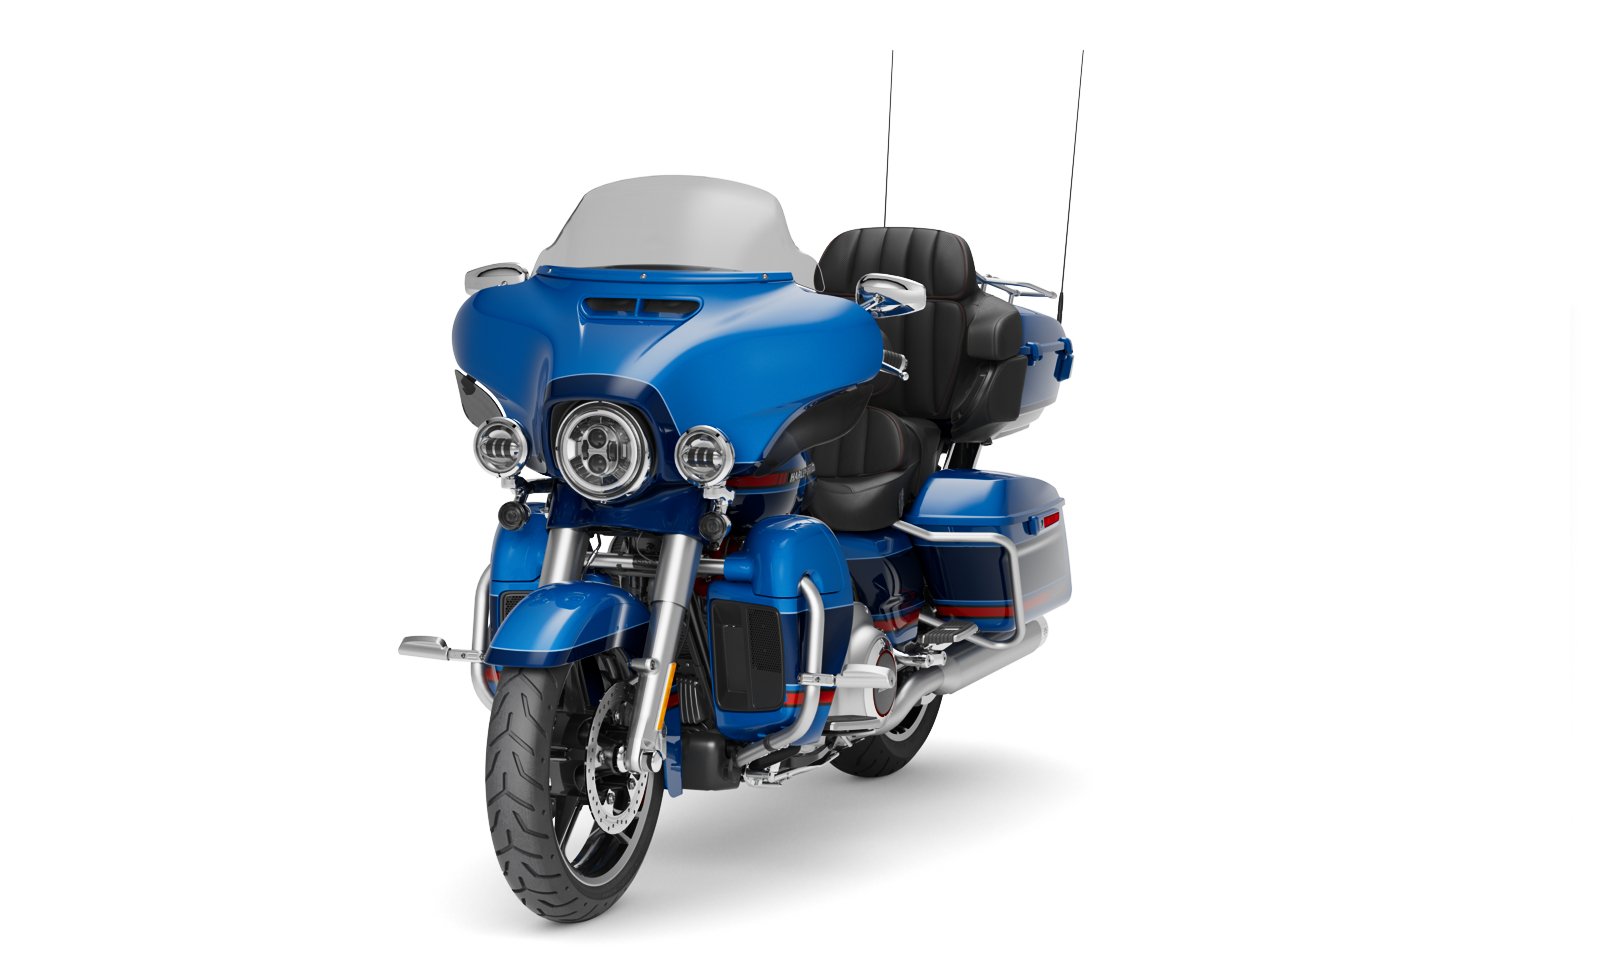 2020 Cvo Limited Motorcycle Harley Davidson Europe